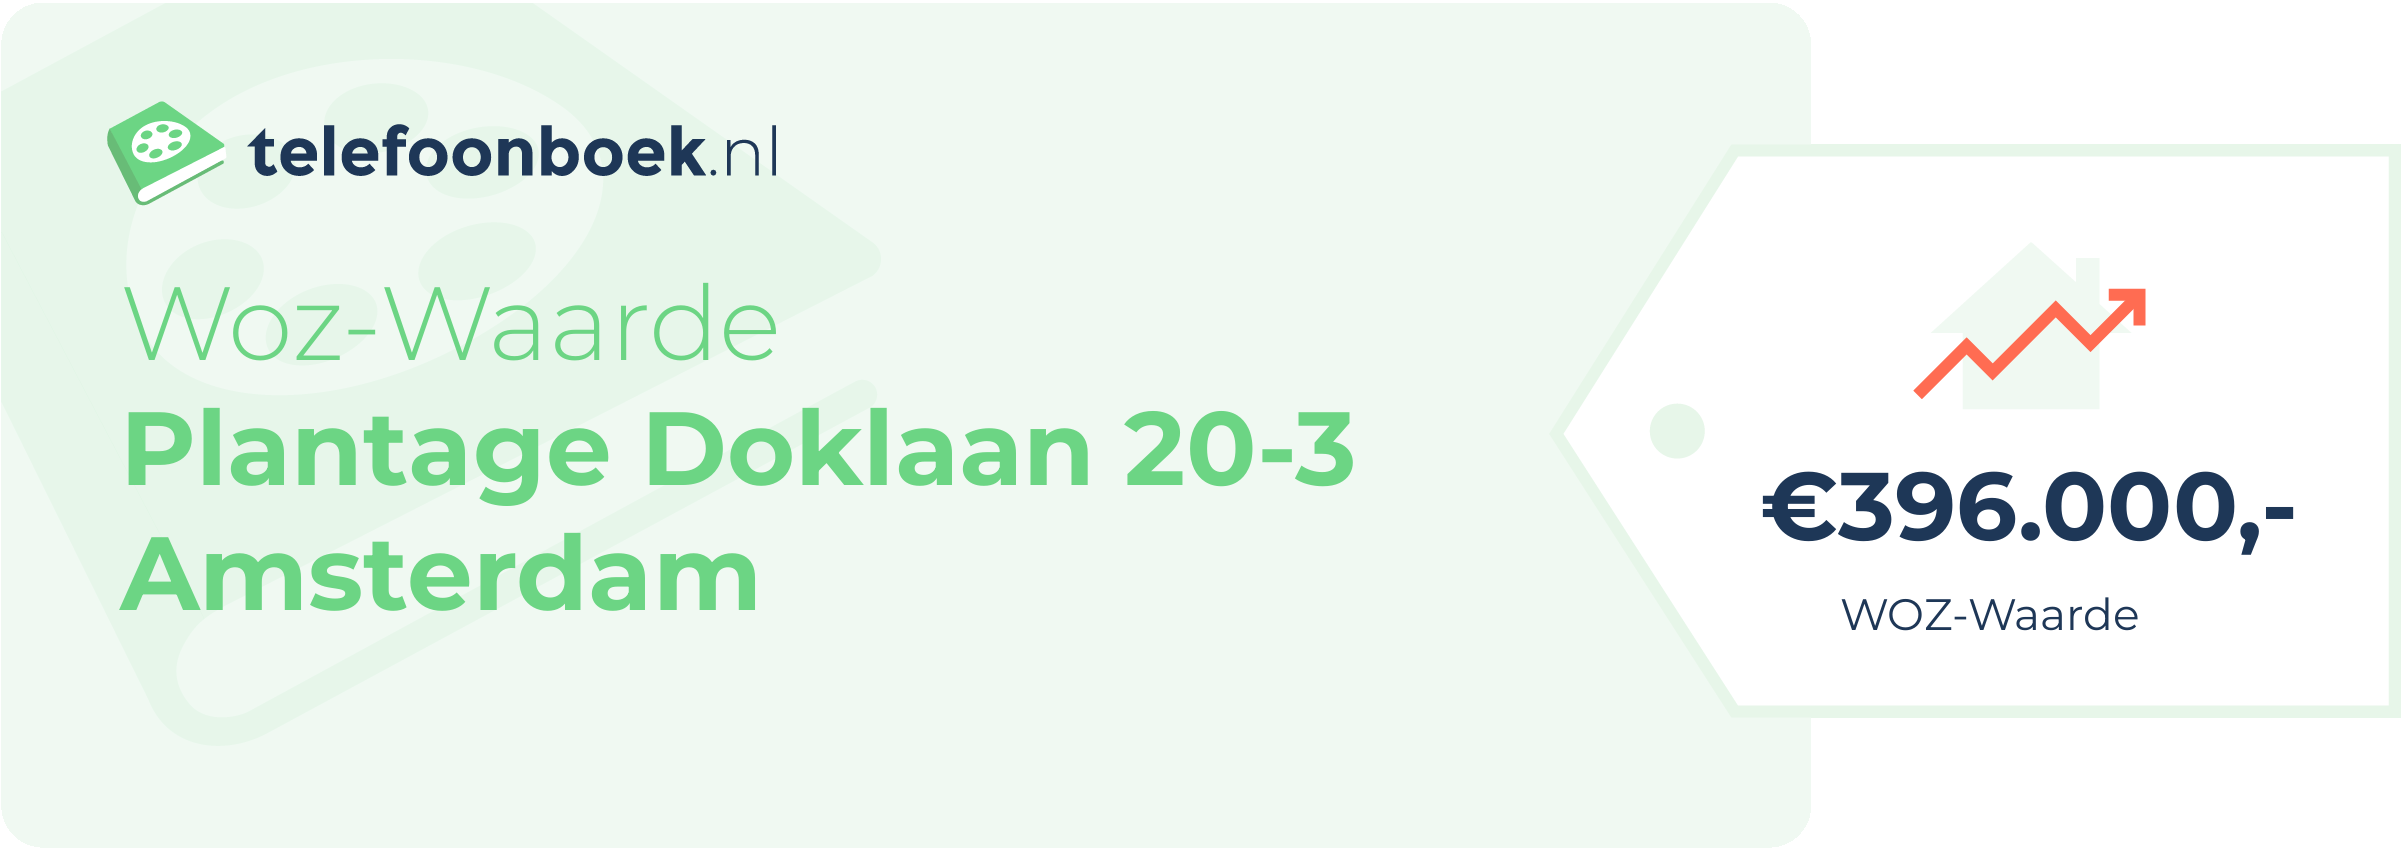 WOZ-waarde Plantage Doklaan 20-3 Amsterdam